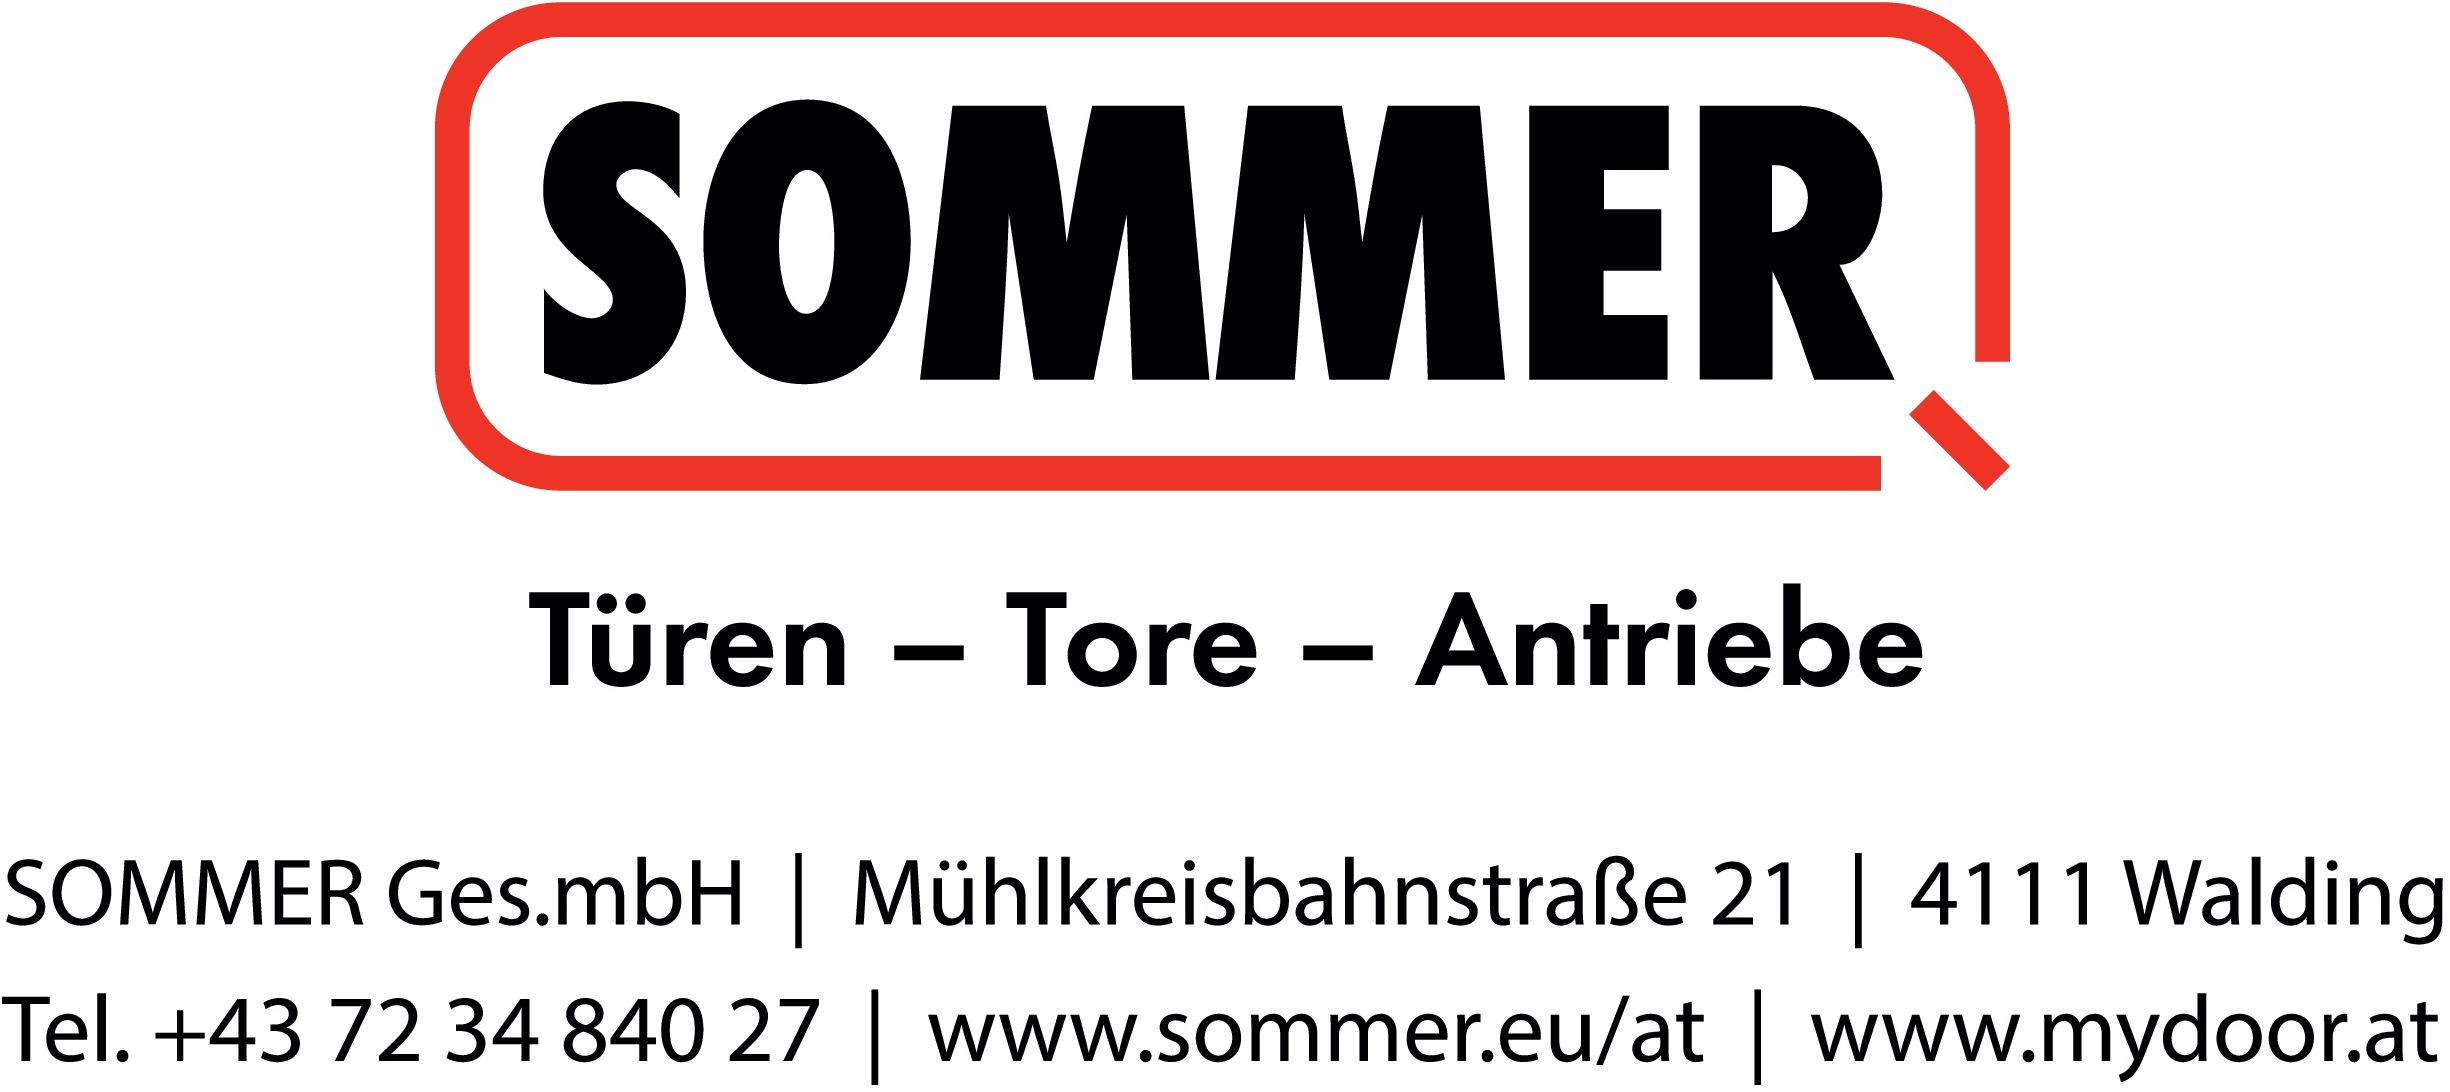 Logo SOMMER mit Adresse mod